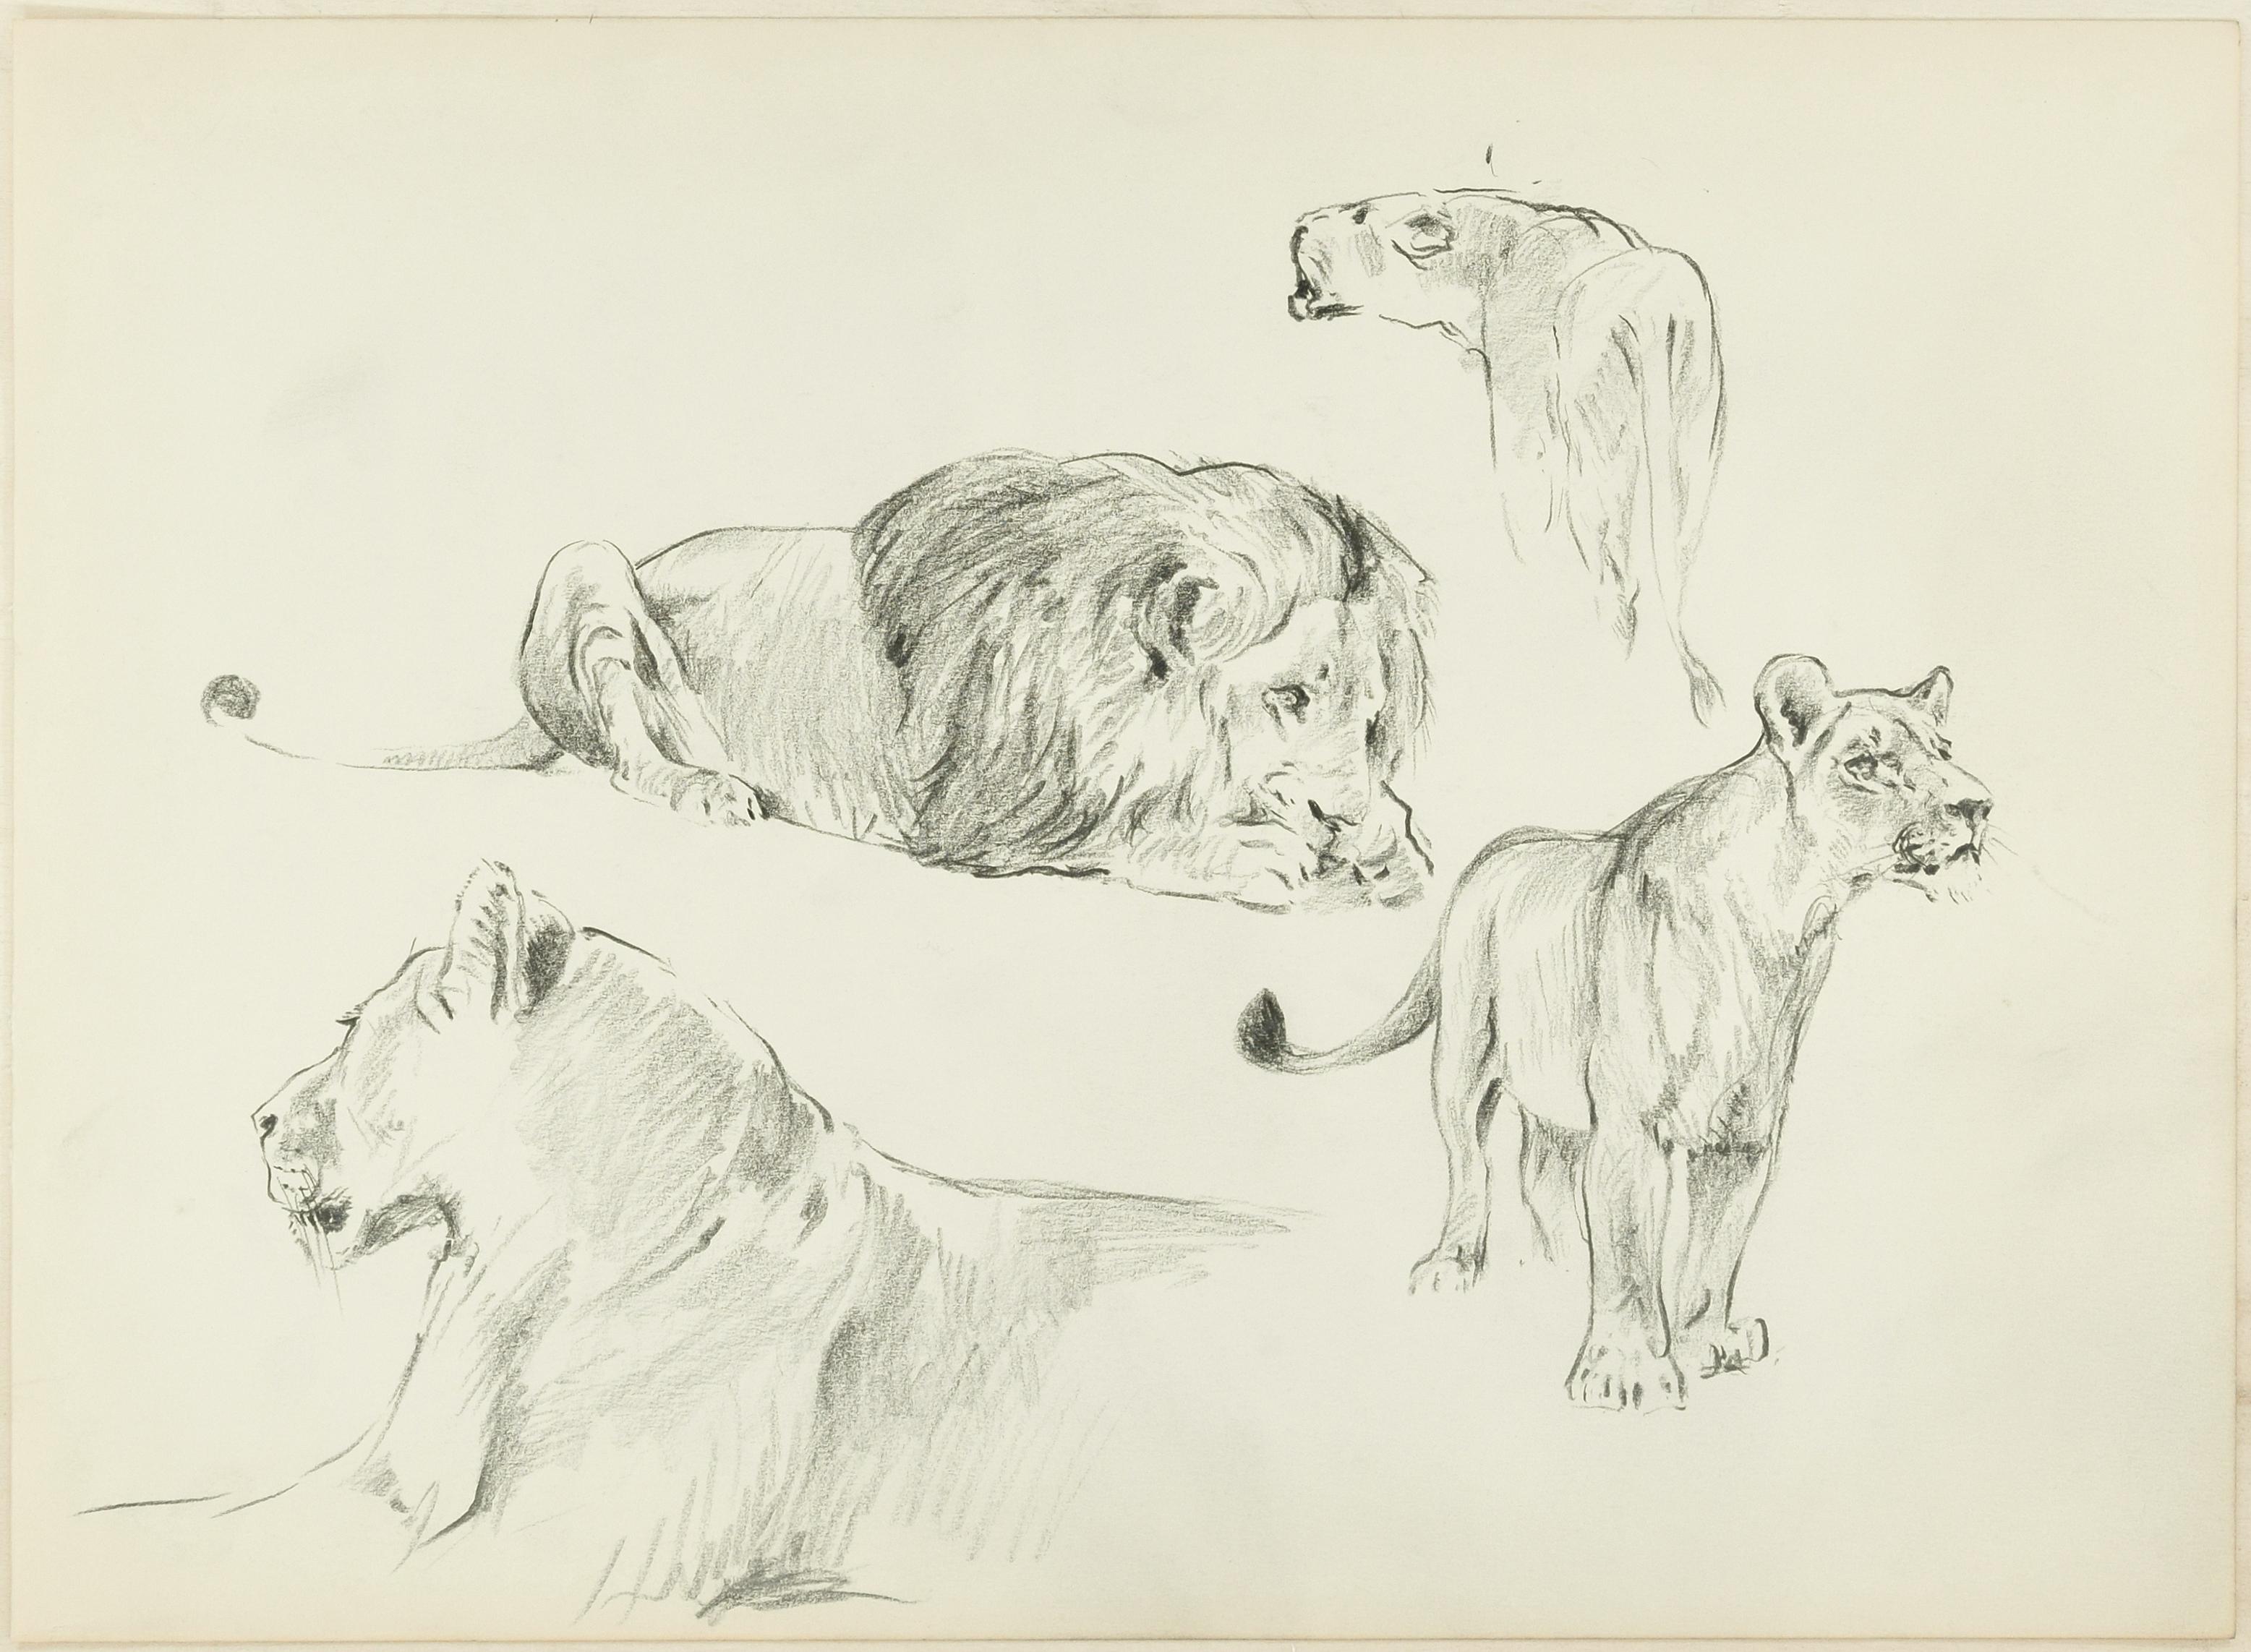 Wilhelm Lorenz Animal Art - Study of Felines - Original Pencil Drawing by Willy Lorenz - 1950s